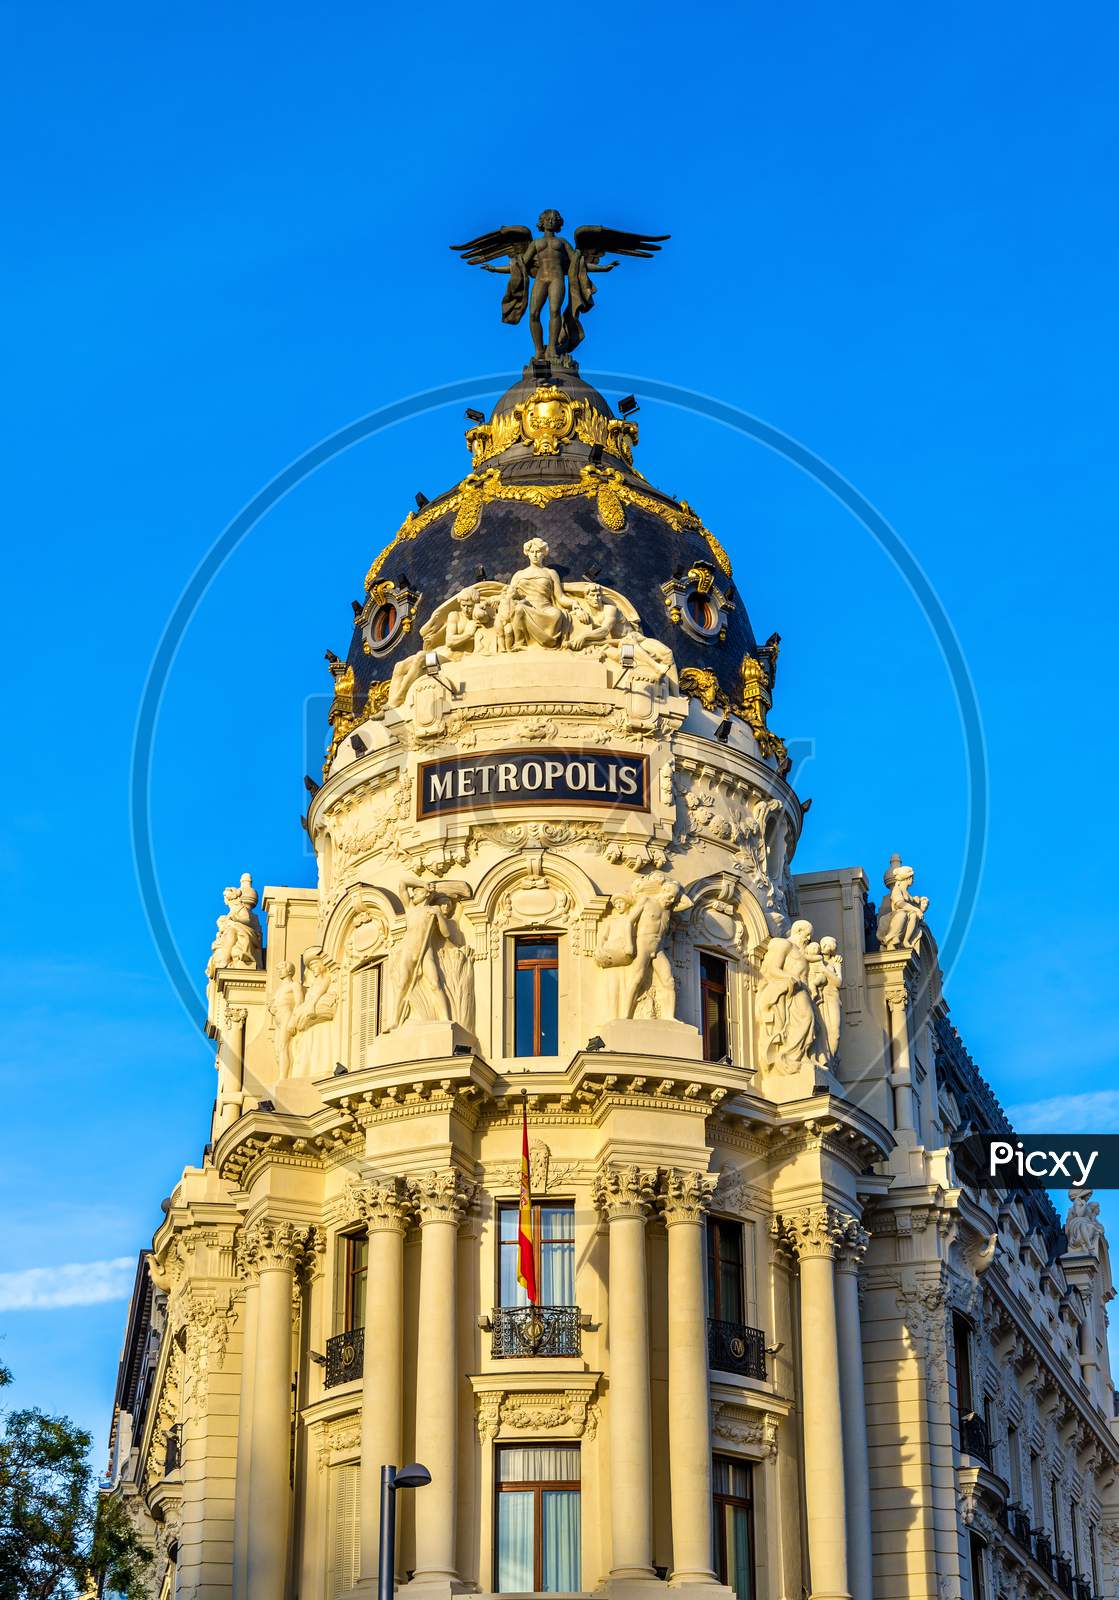 The Edificio Metropolis, A Historic Building In Madrid, Spain